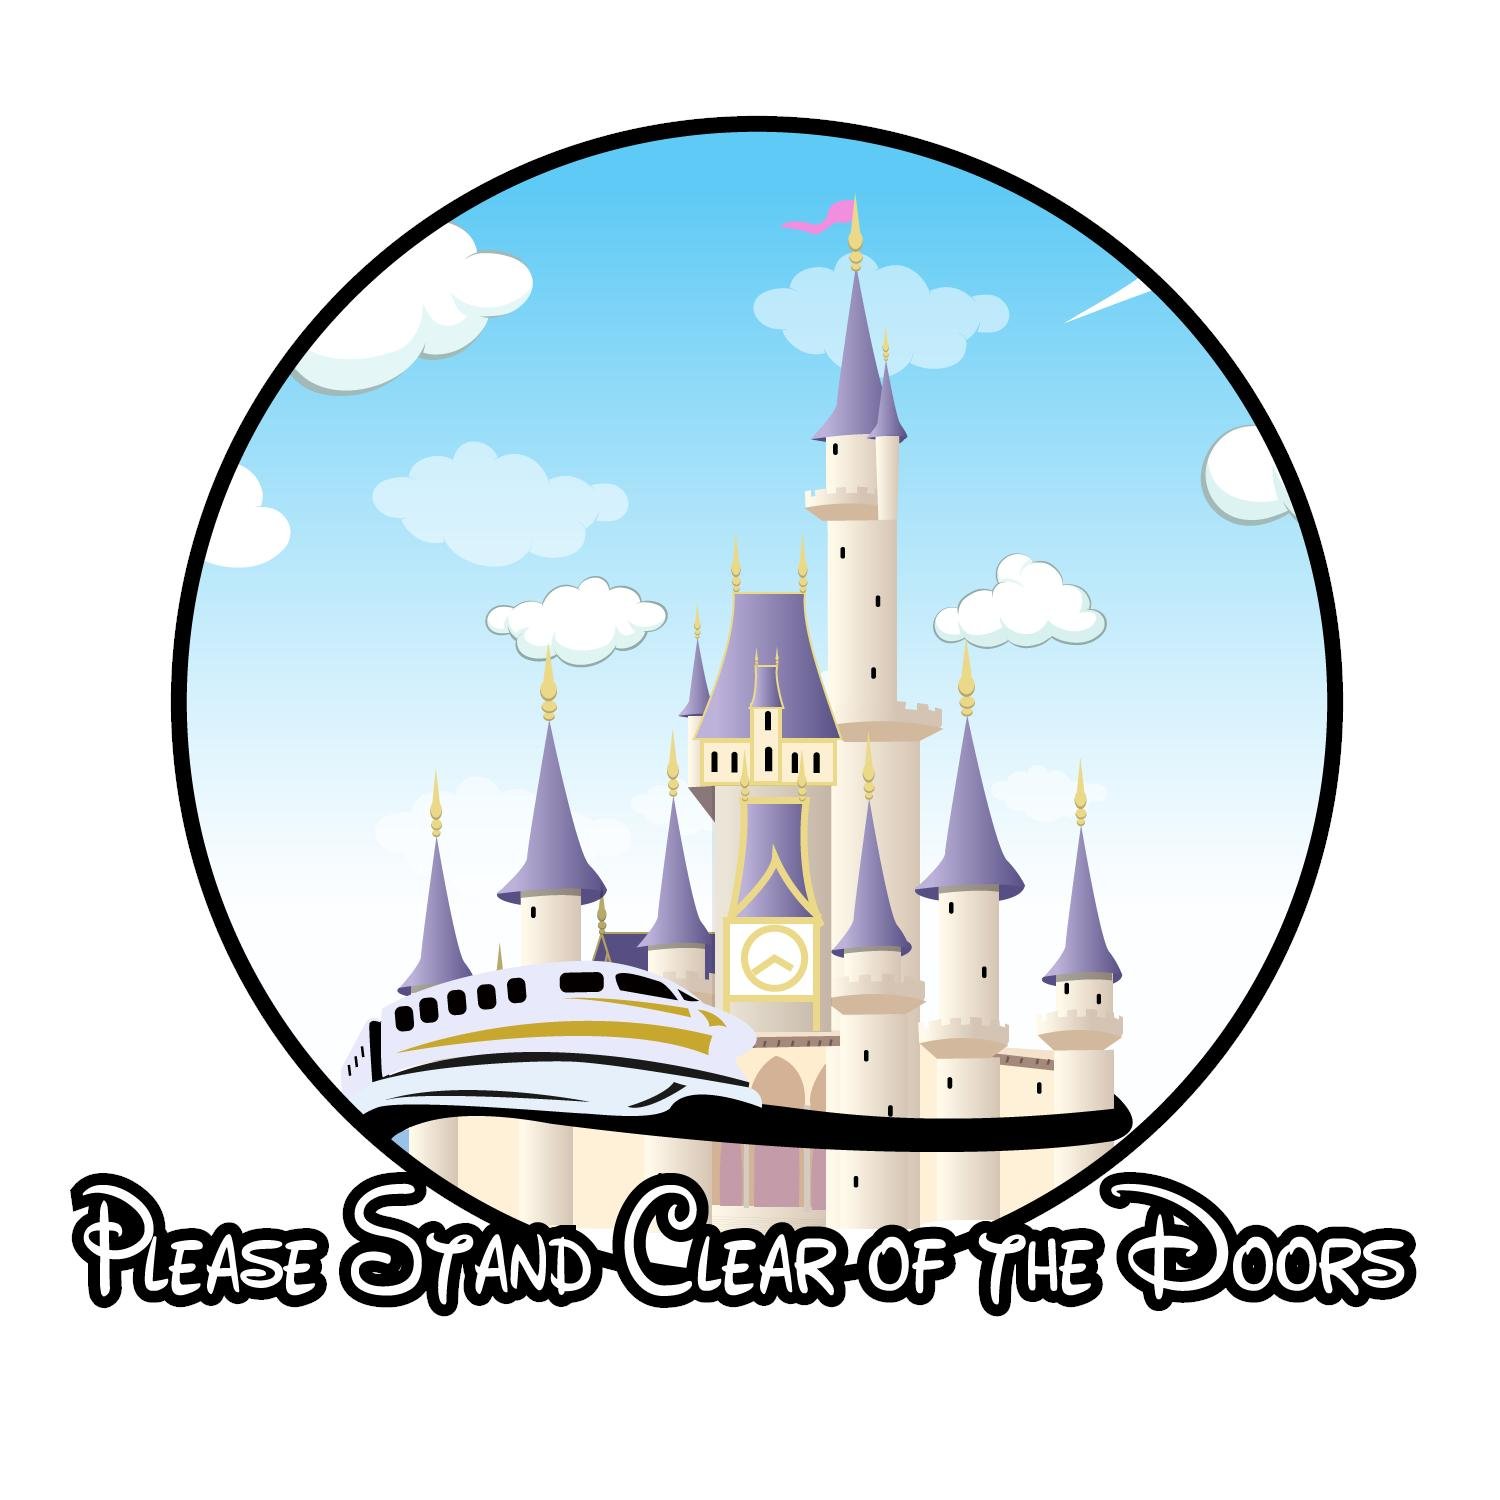 A Walt Disney World Parks and Vacation Blog